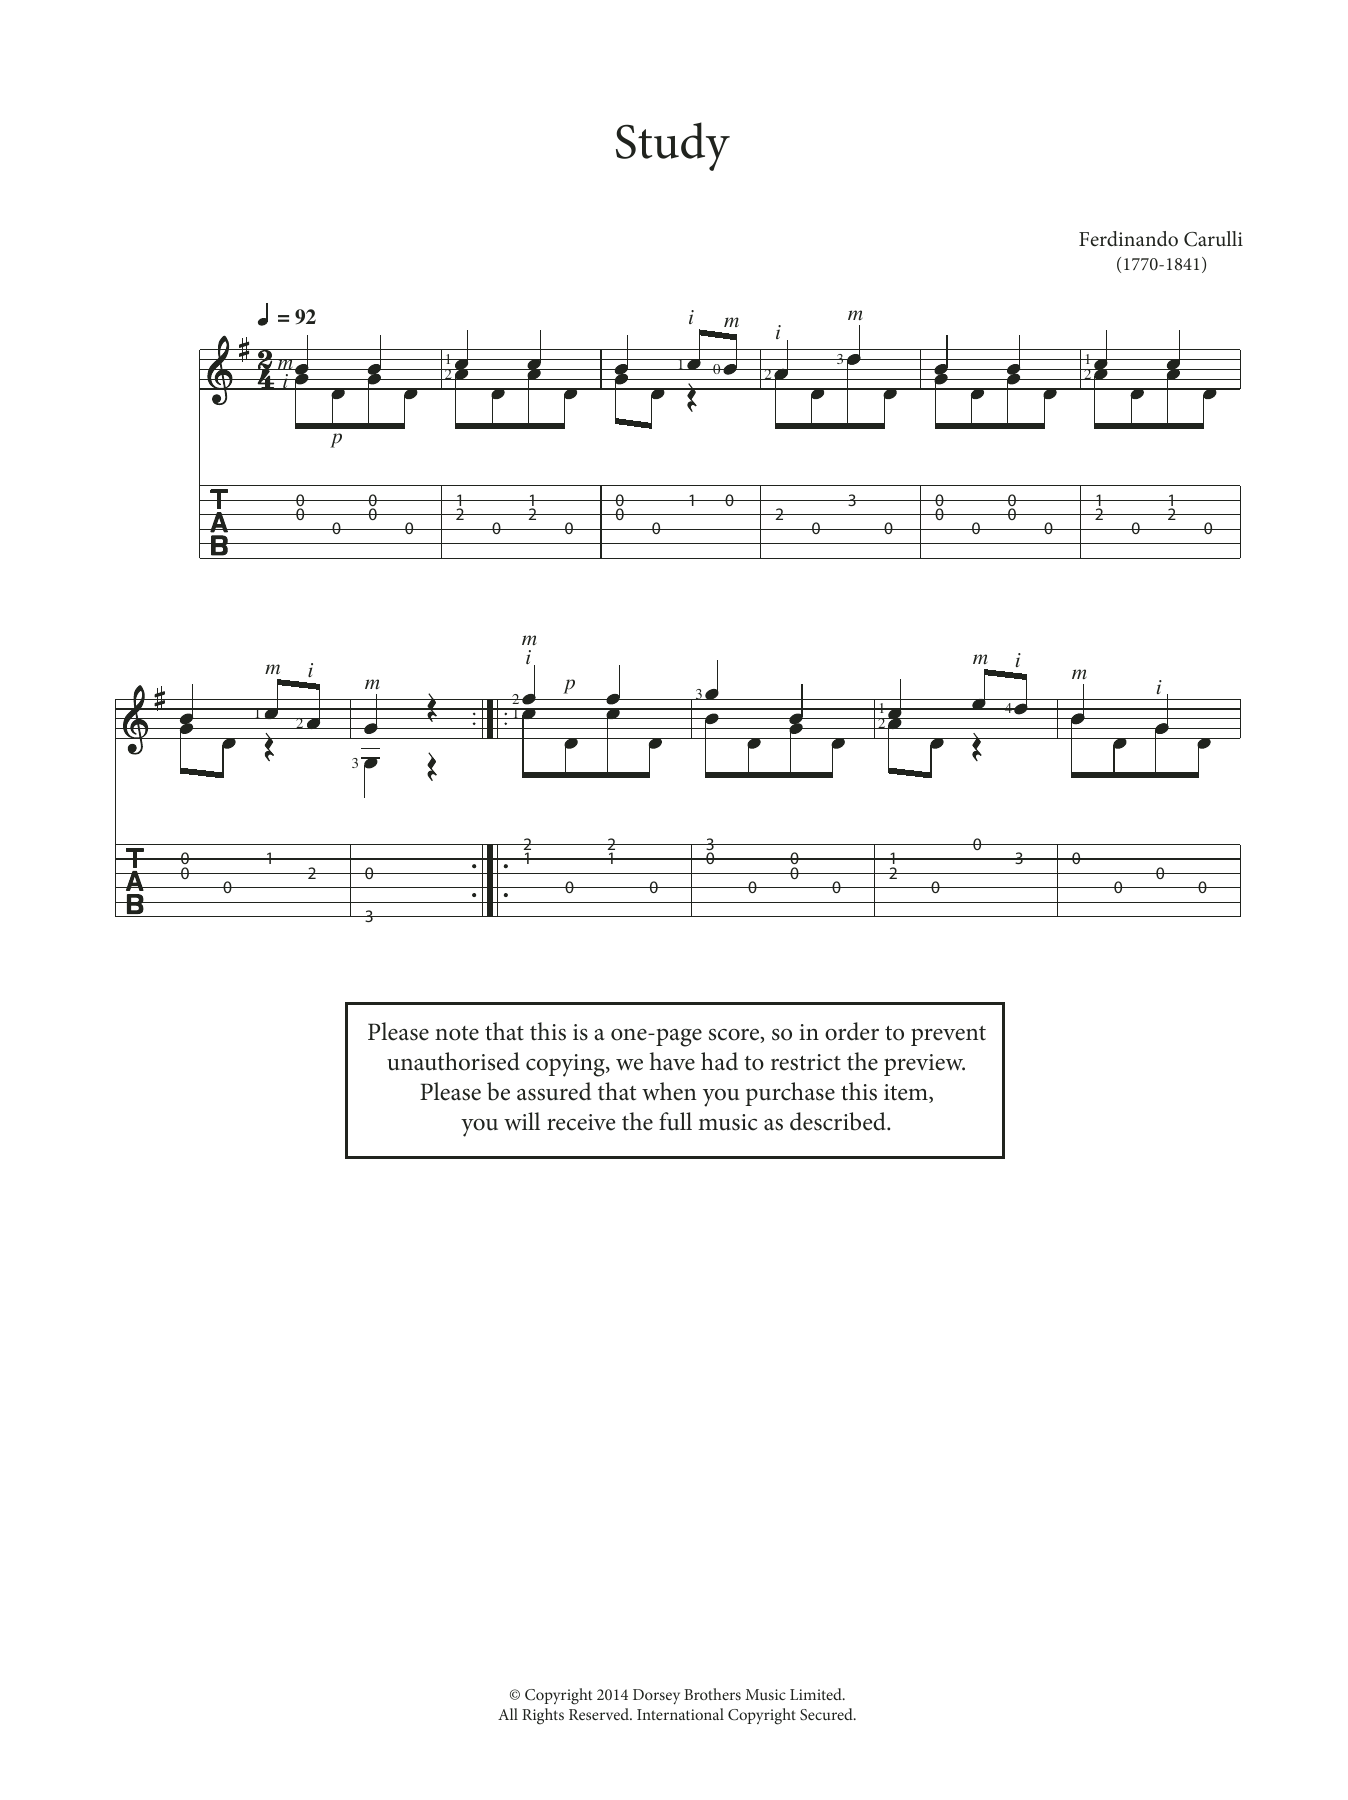 Download Ferdinando Carulli Study sheet music and printable PDF score & Classical music notes